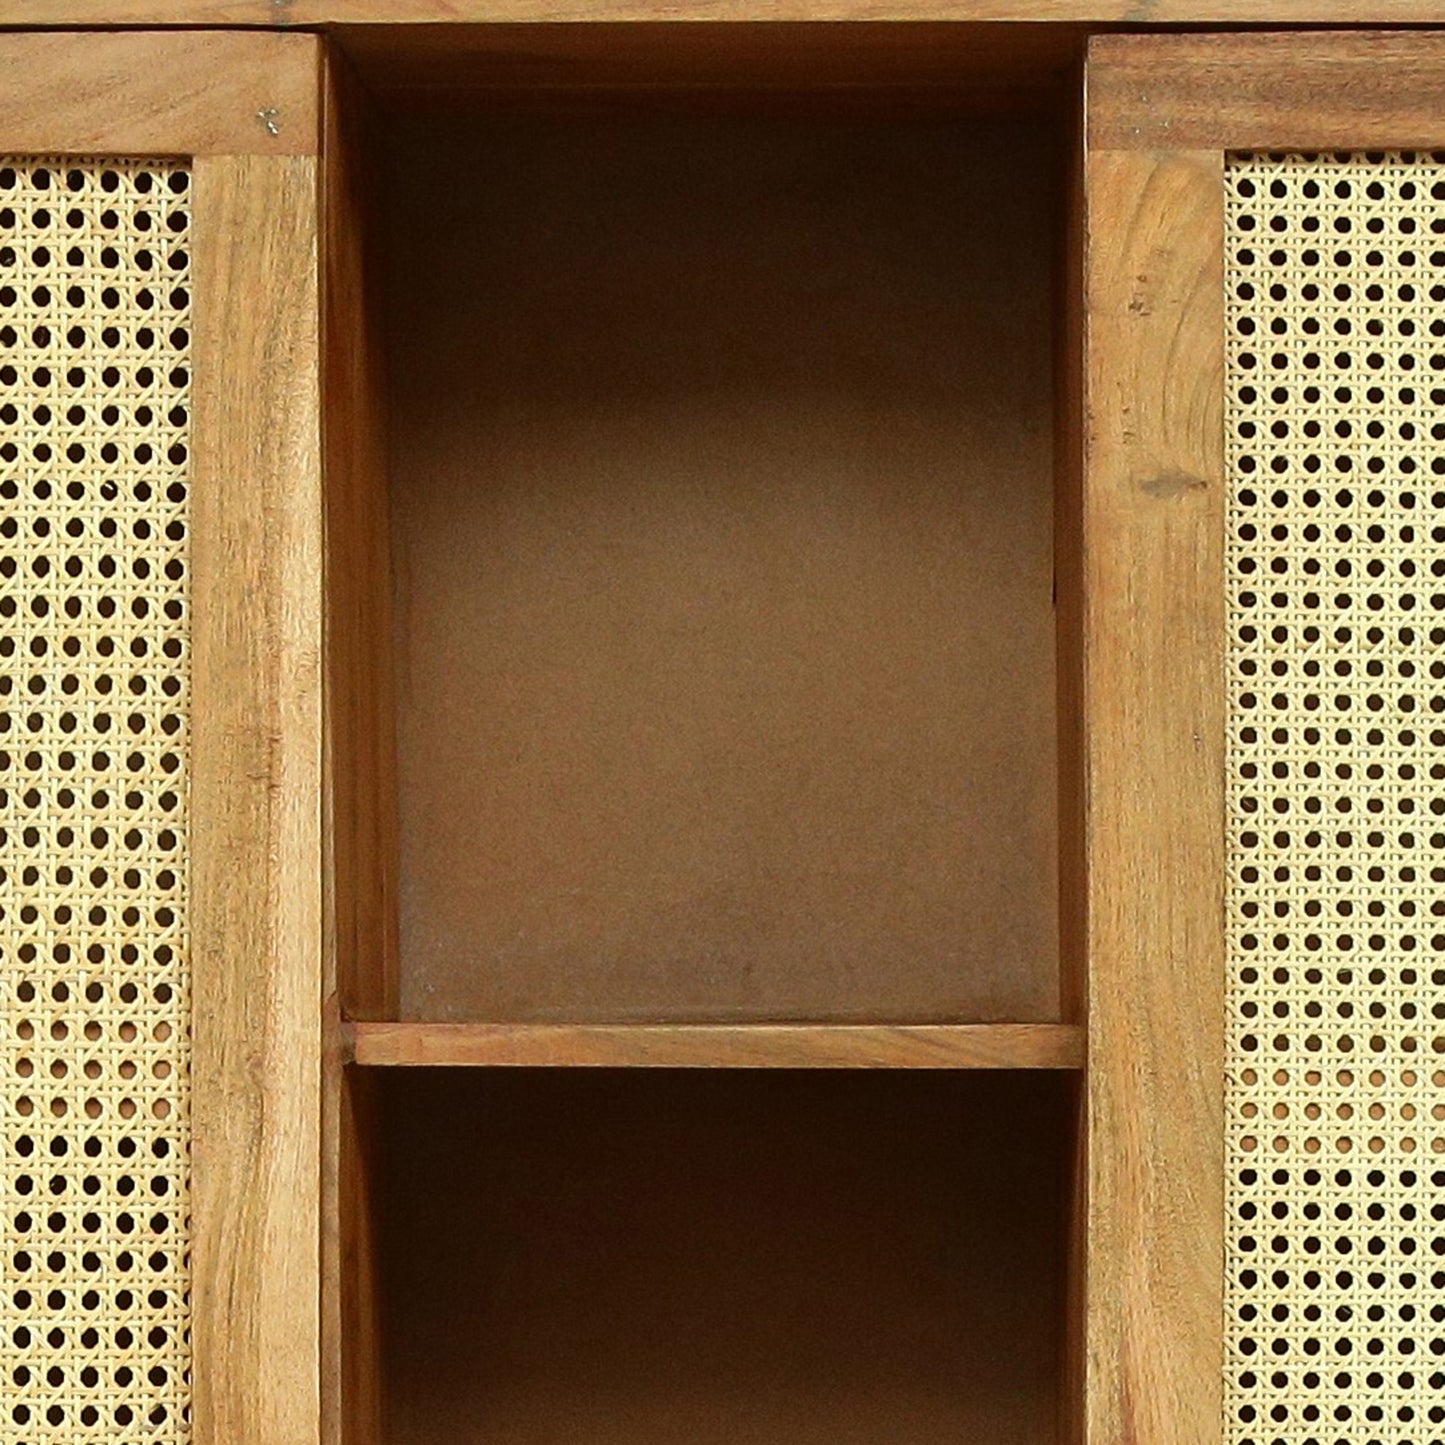 Malquin Handmade Acacia Wood and Cane 3 Shelf Bookcase, Natural